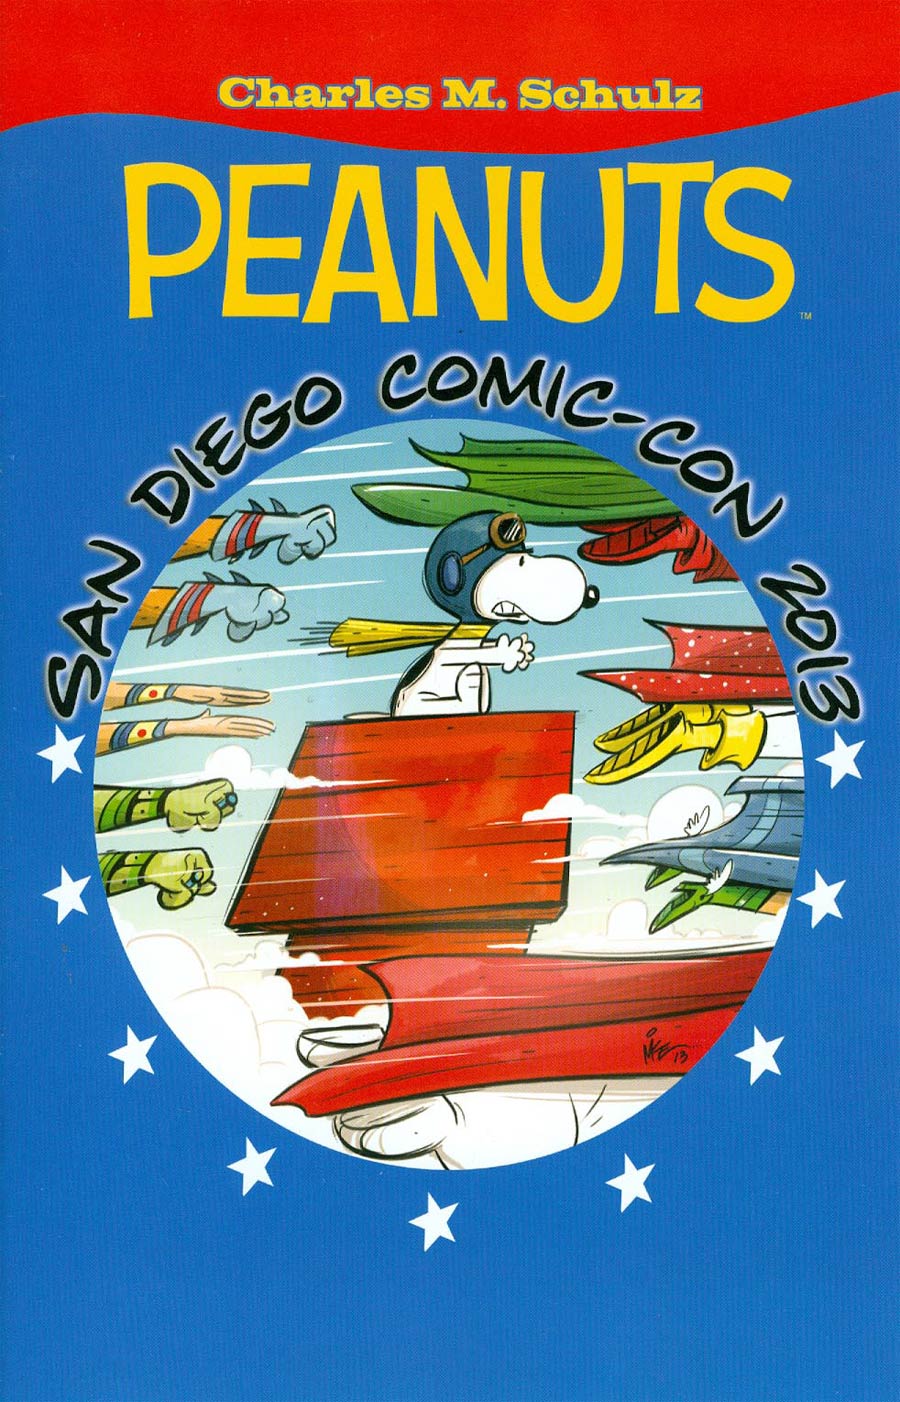 Peanuts Vol 3 #9 Cover C SDCC Exclusive Variant Cover